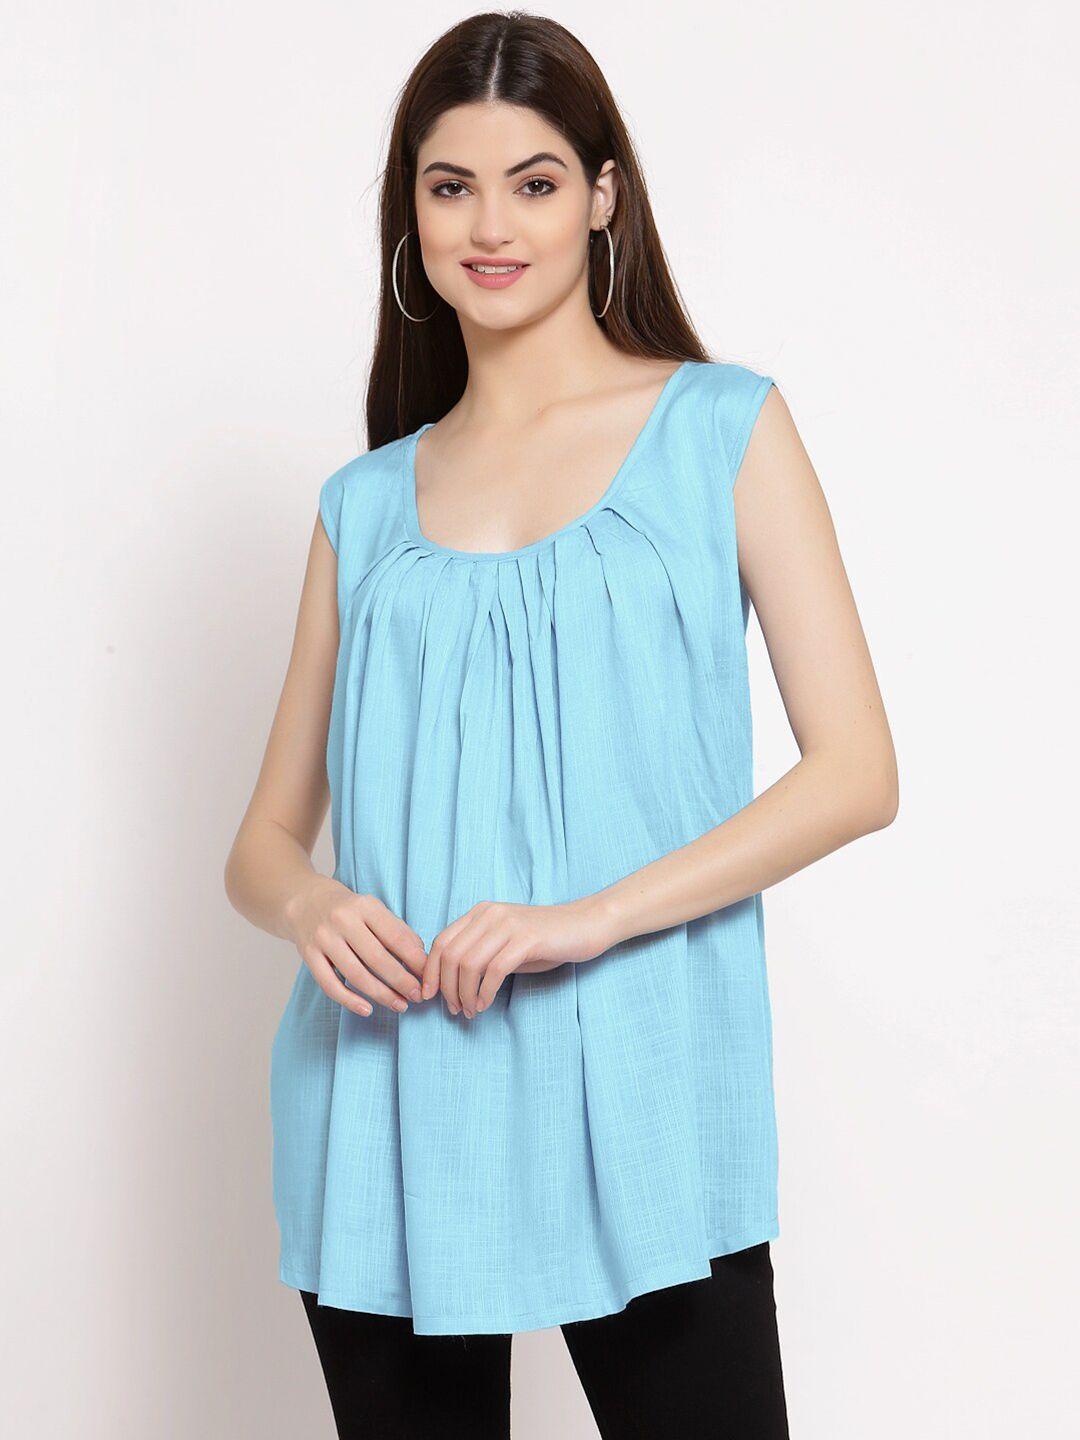 patrorna-women-blue-solid-scoop-neck-sleeveless-empire-cotton-blend-top